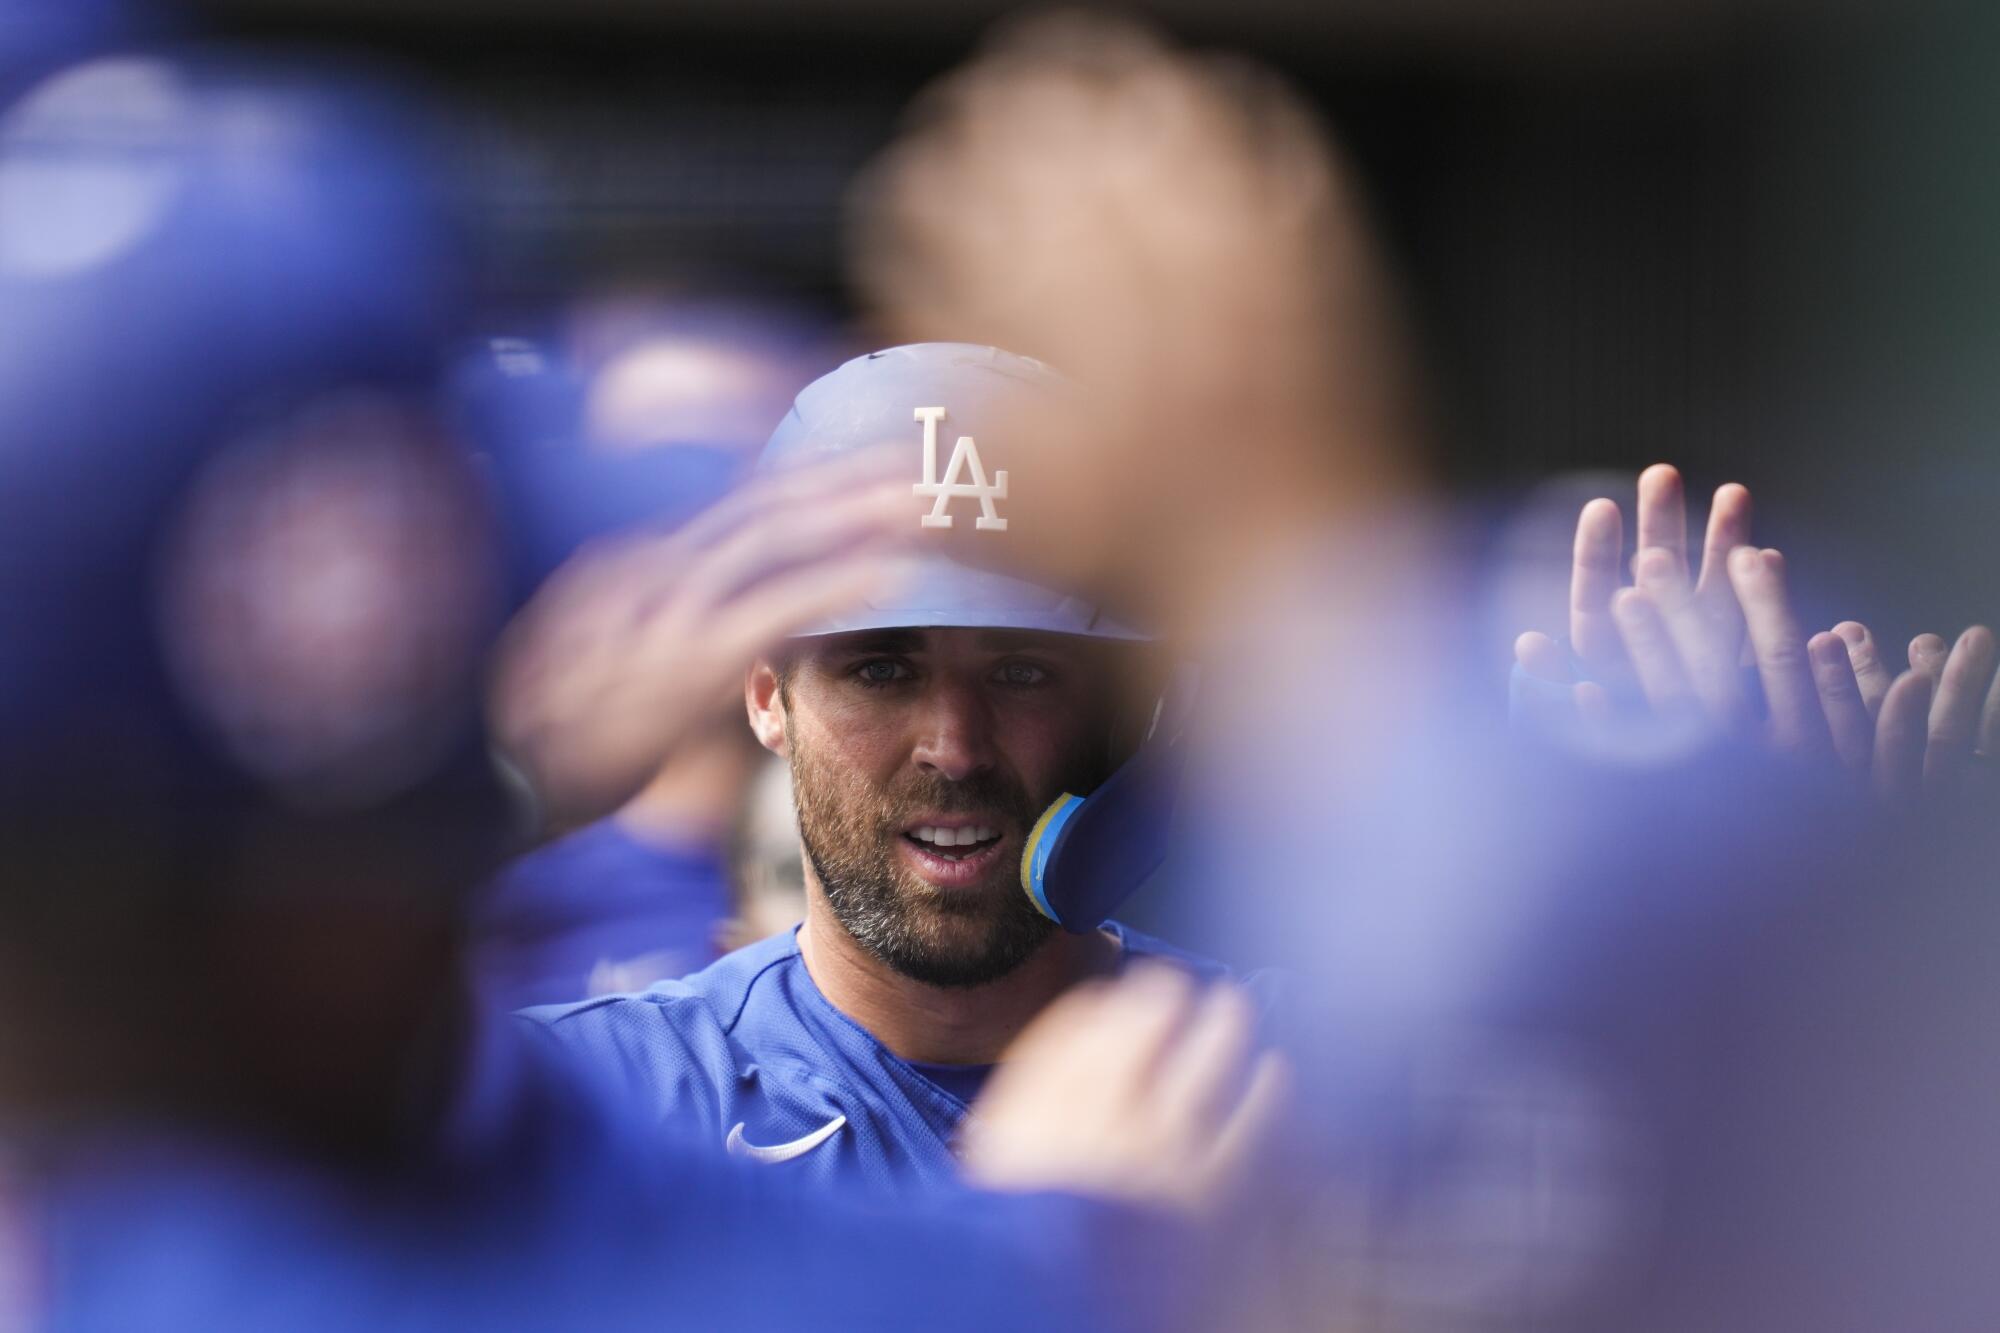 Miguel Vargas' MLB debut with Dodgers puts pressure on Justin Turner